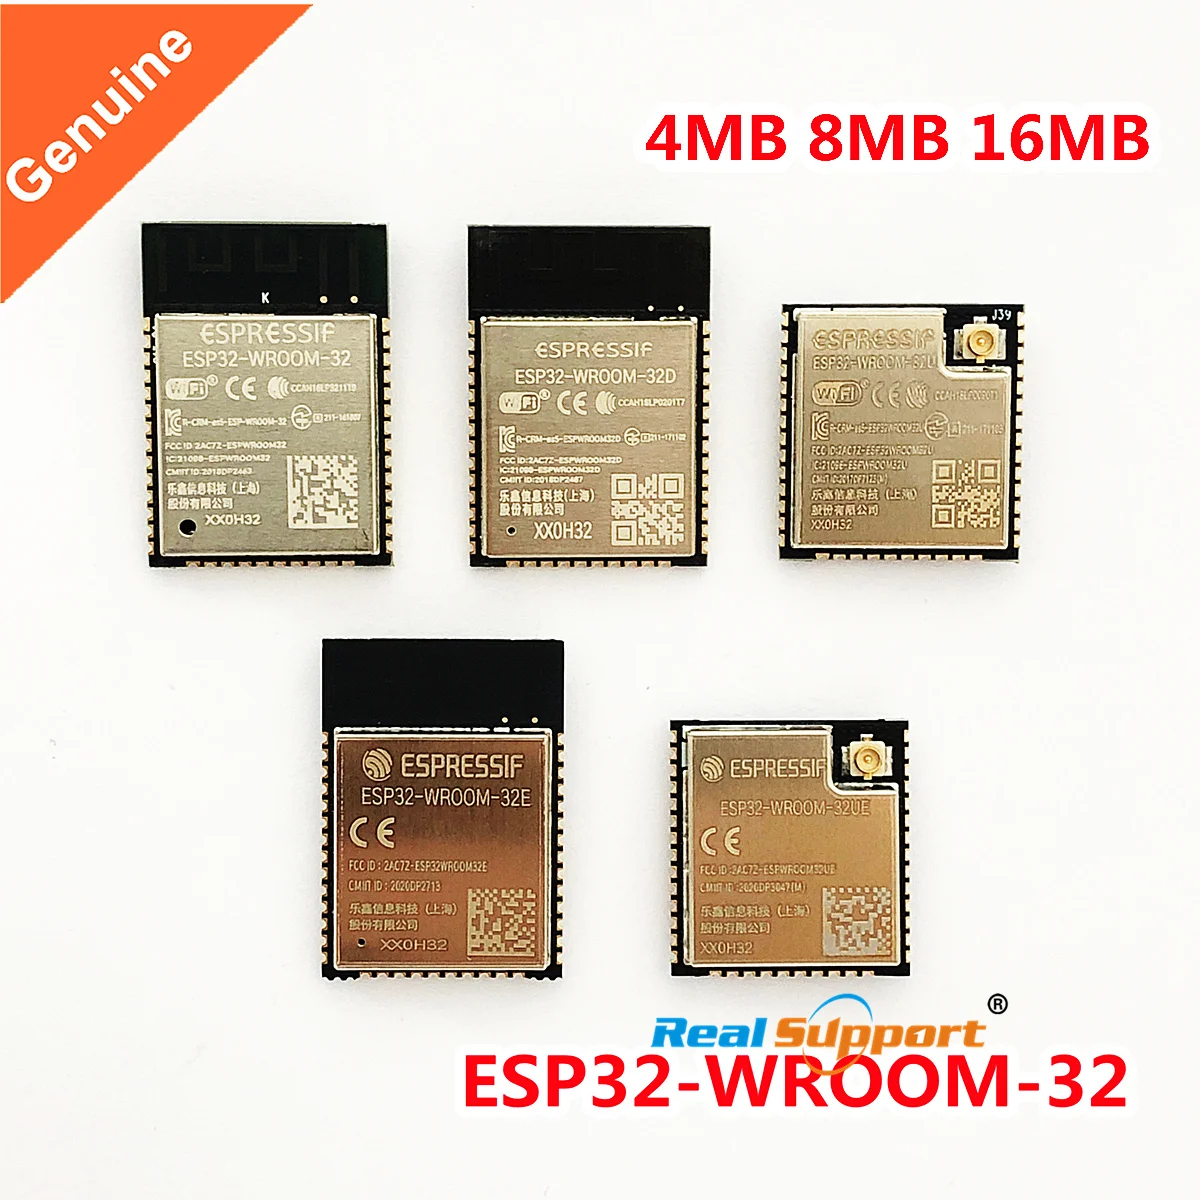 ESP32-WROOM-32 ESP32 W Room ESP-32 4MB 8MB 16MB Dual Core WiFi Wireless BLE MCU Module-32UE -32U -32E -32D